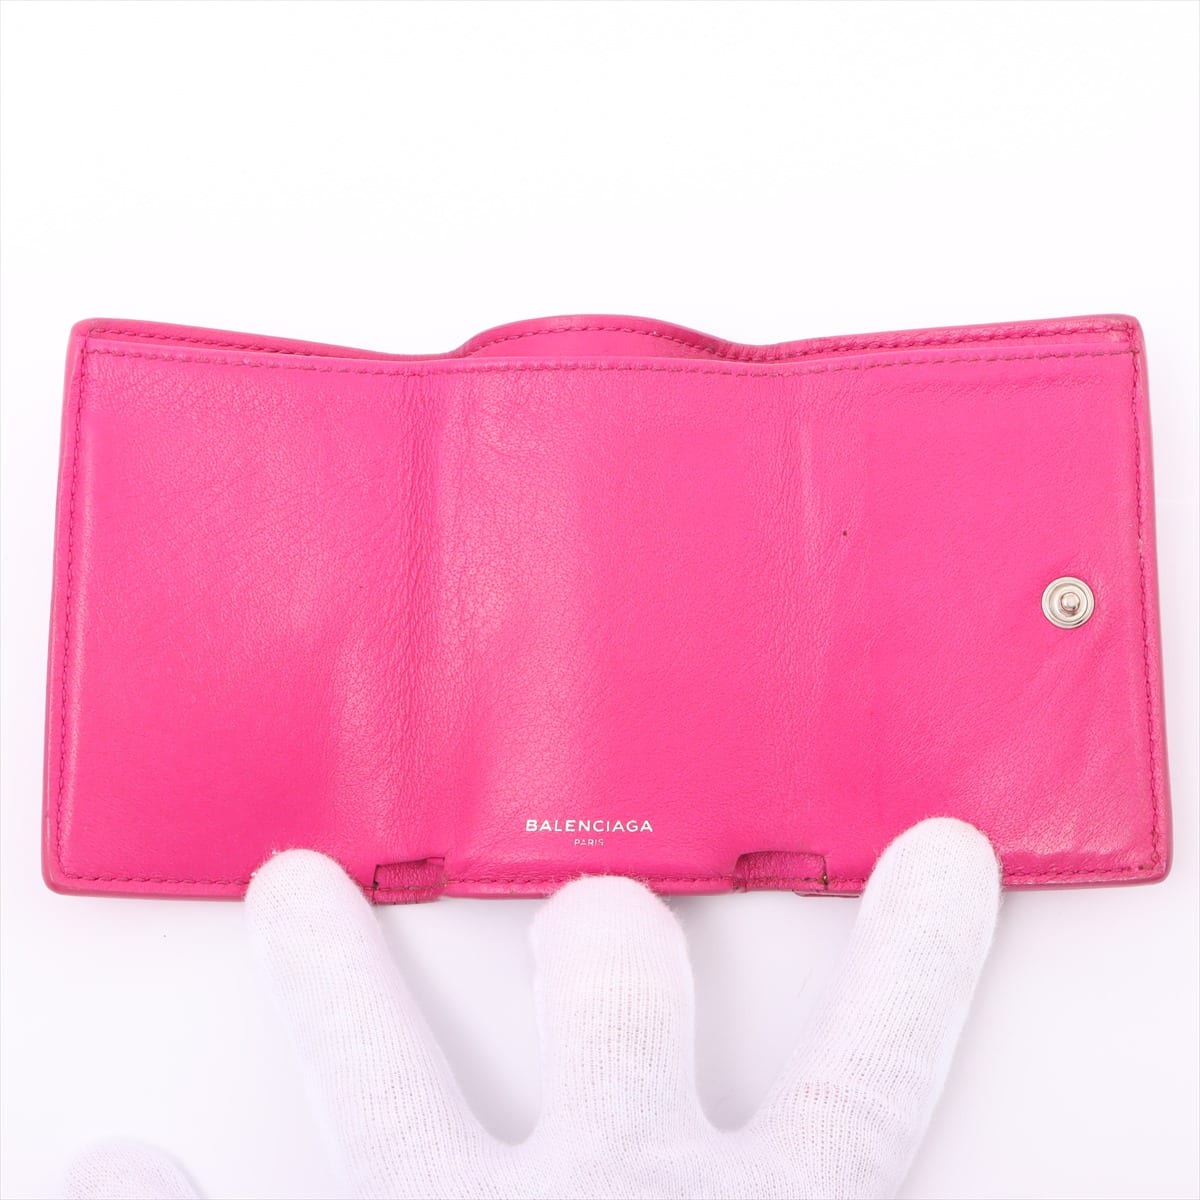 Balenciaga Papier Mini 391446 Leather Wallet Pink